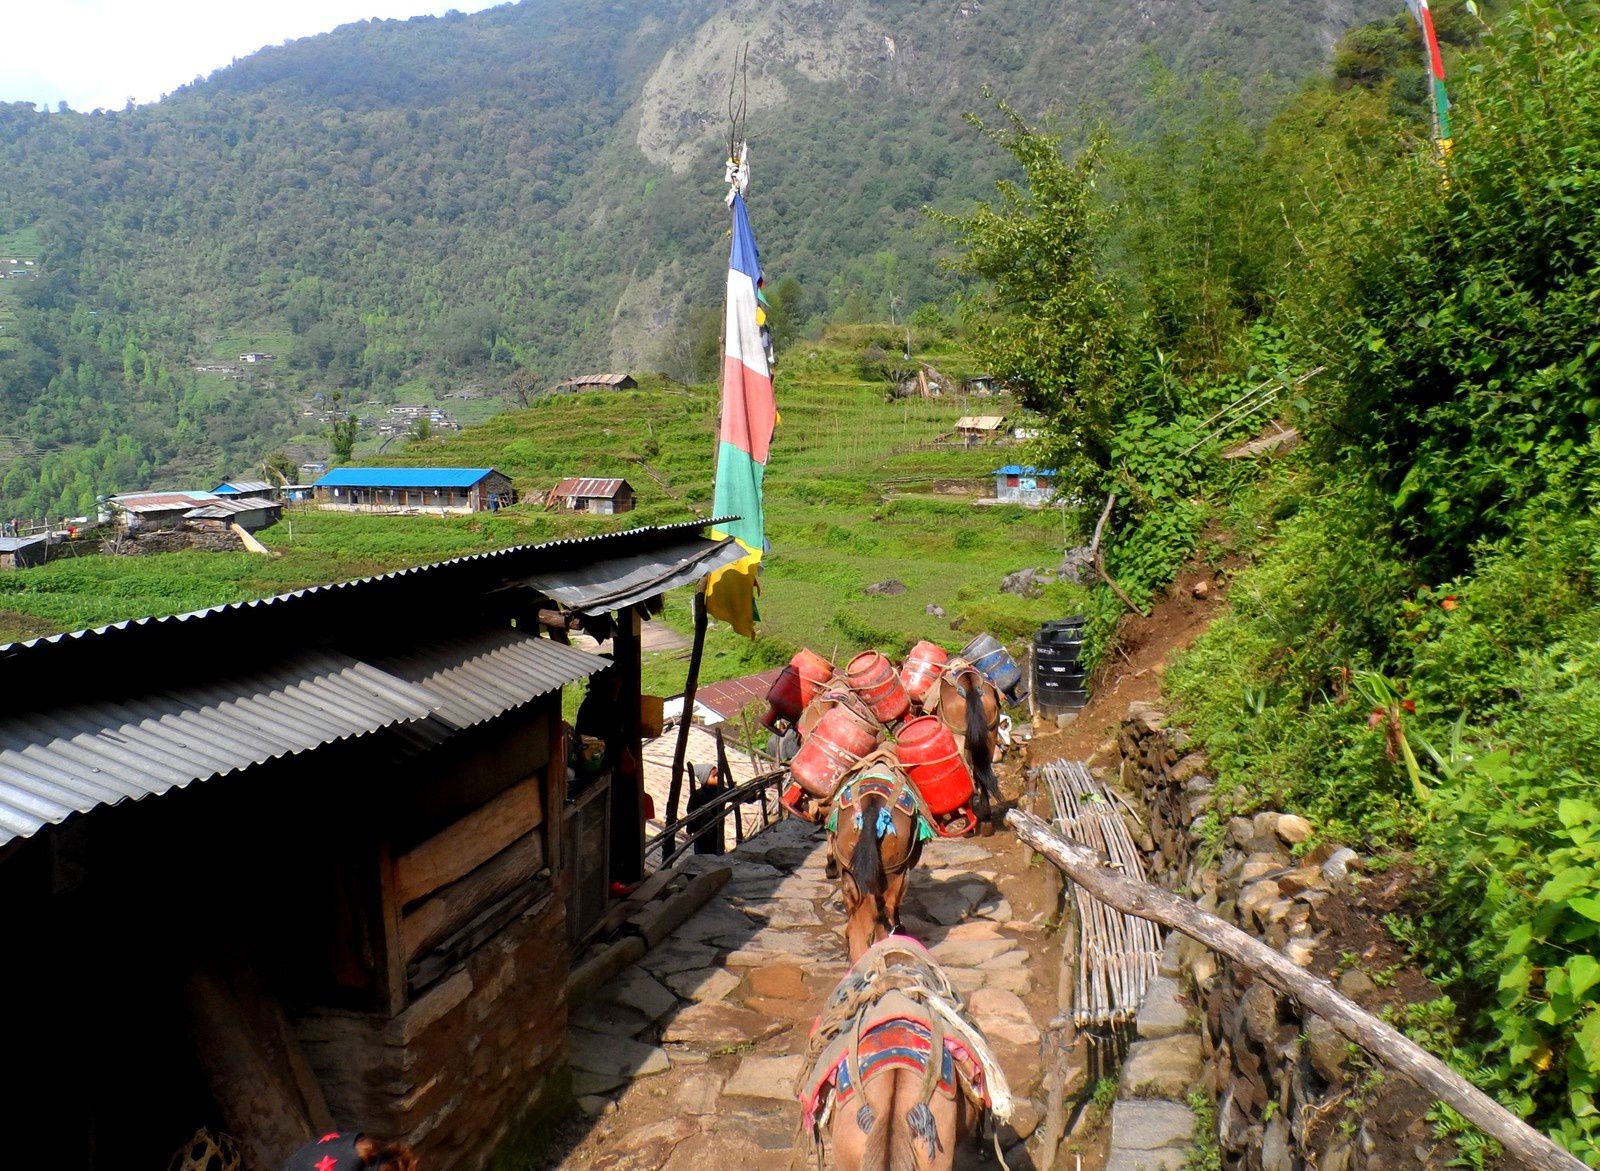 Le camp de base de l'Annapurna